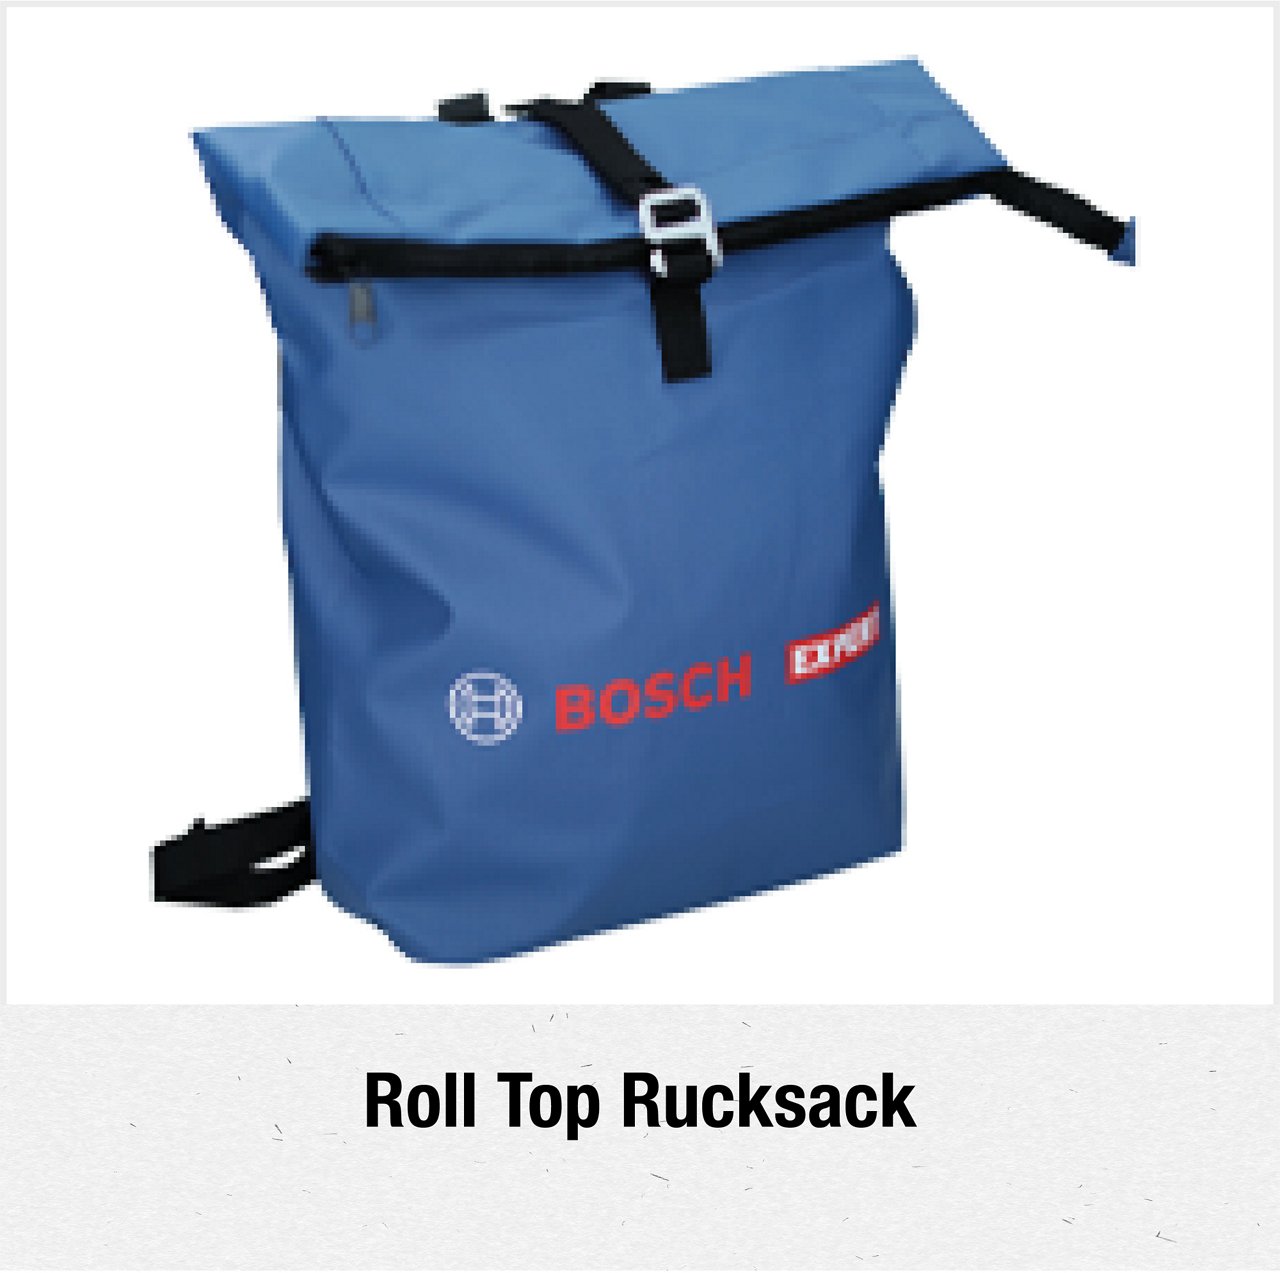 Roll Top Rucksack